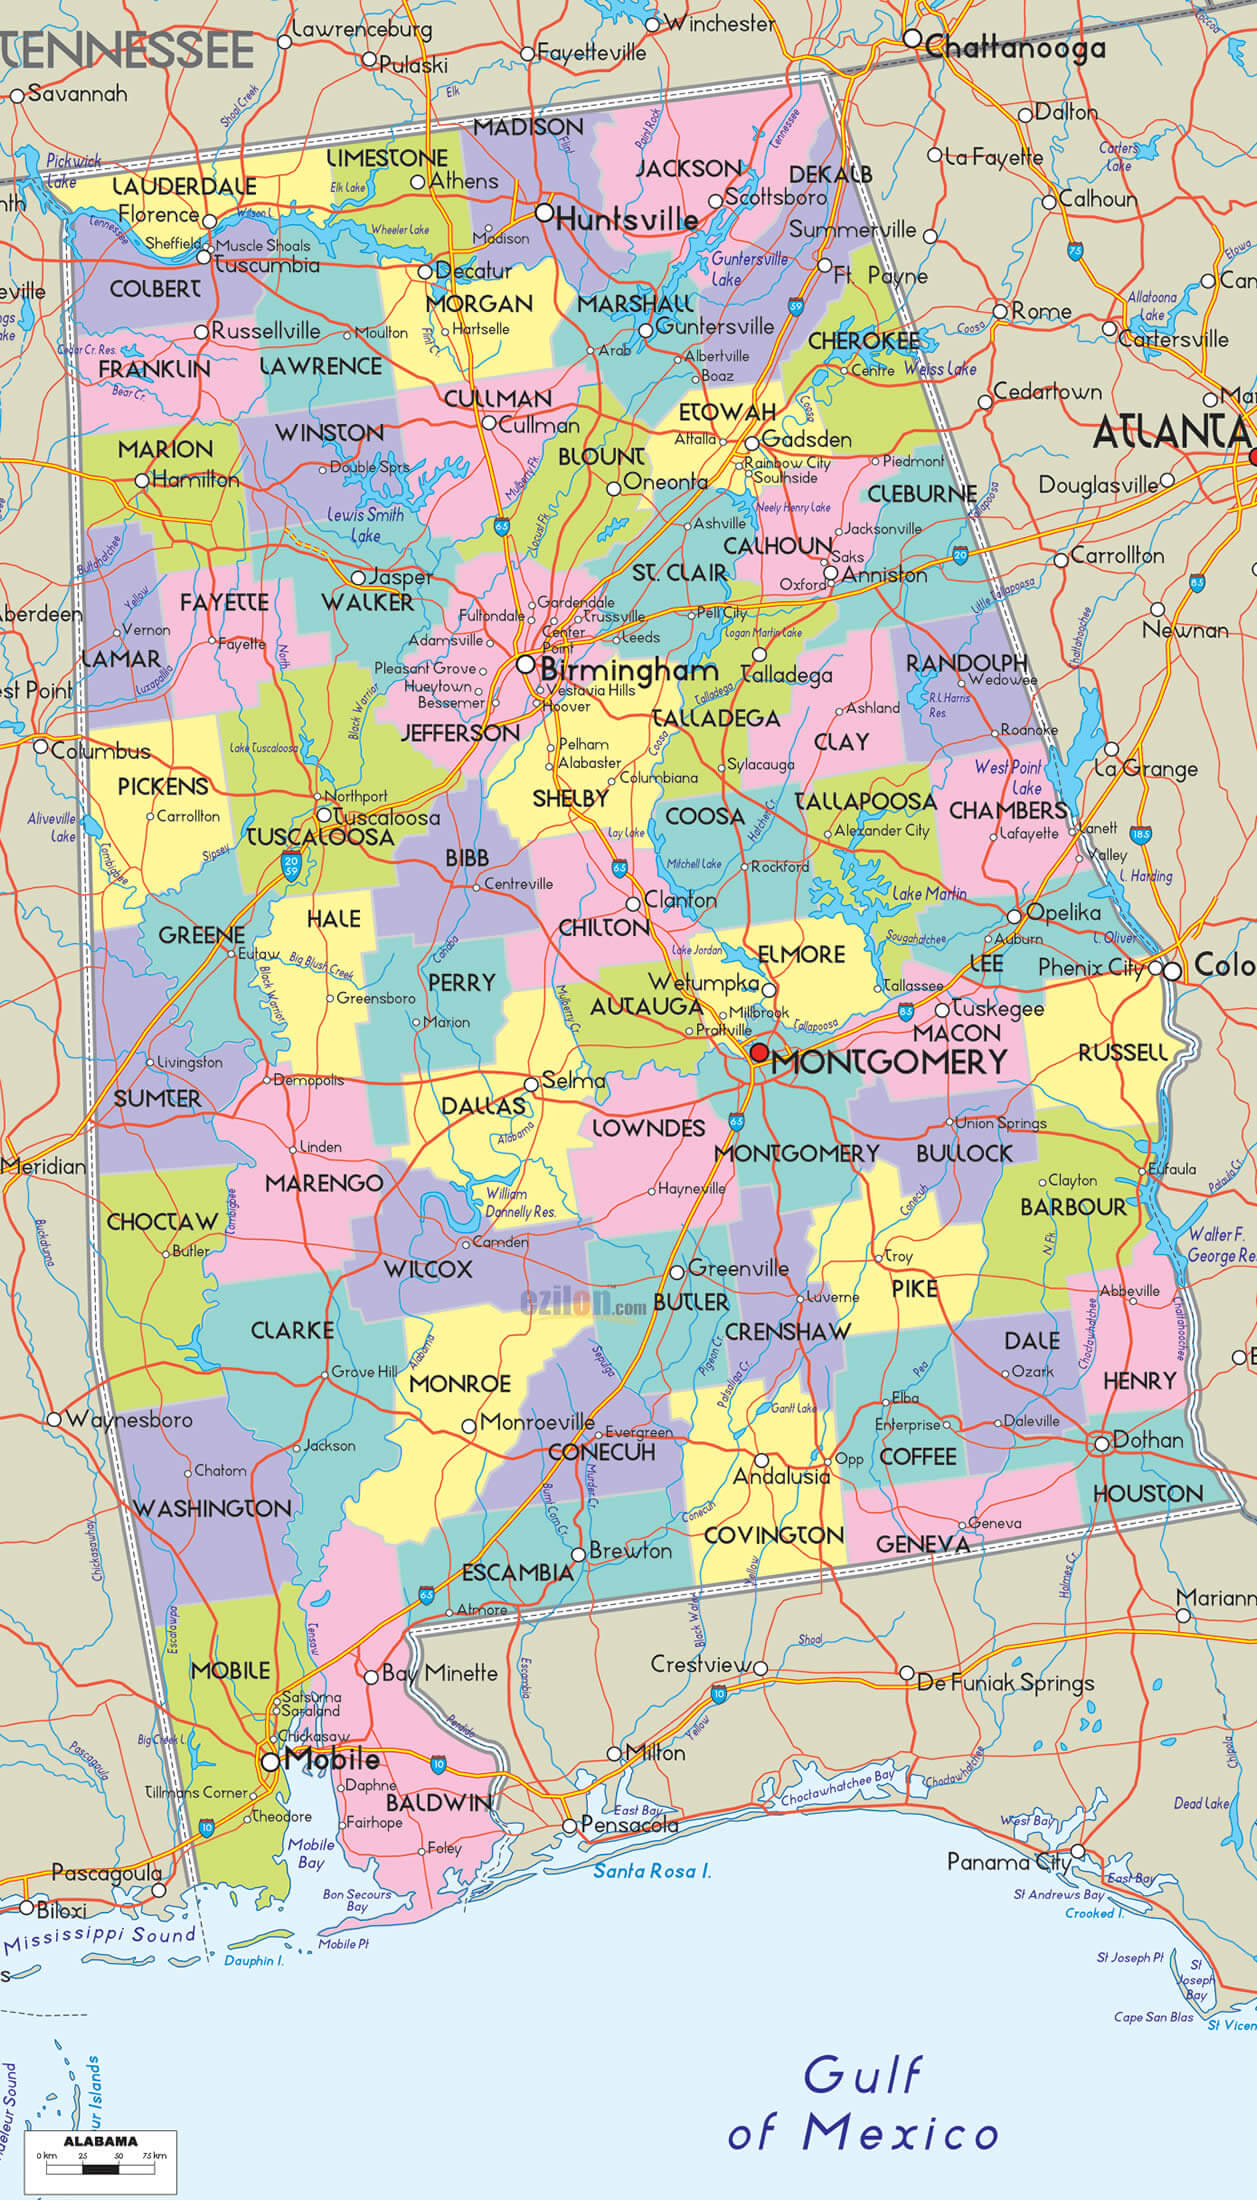 Alabama Counties Road Map USA